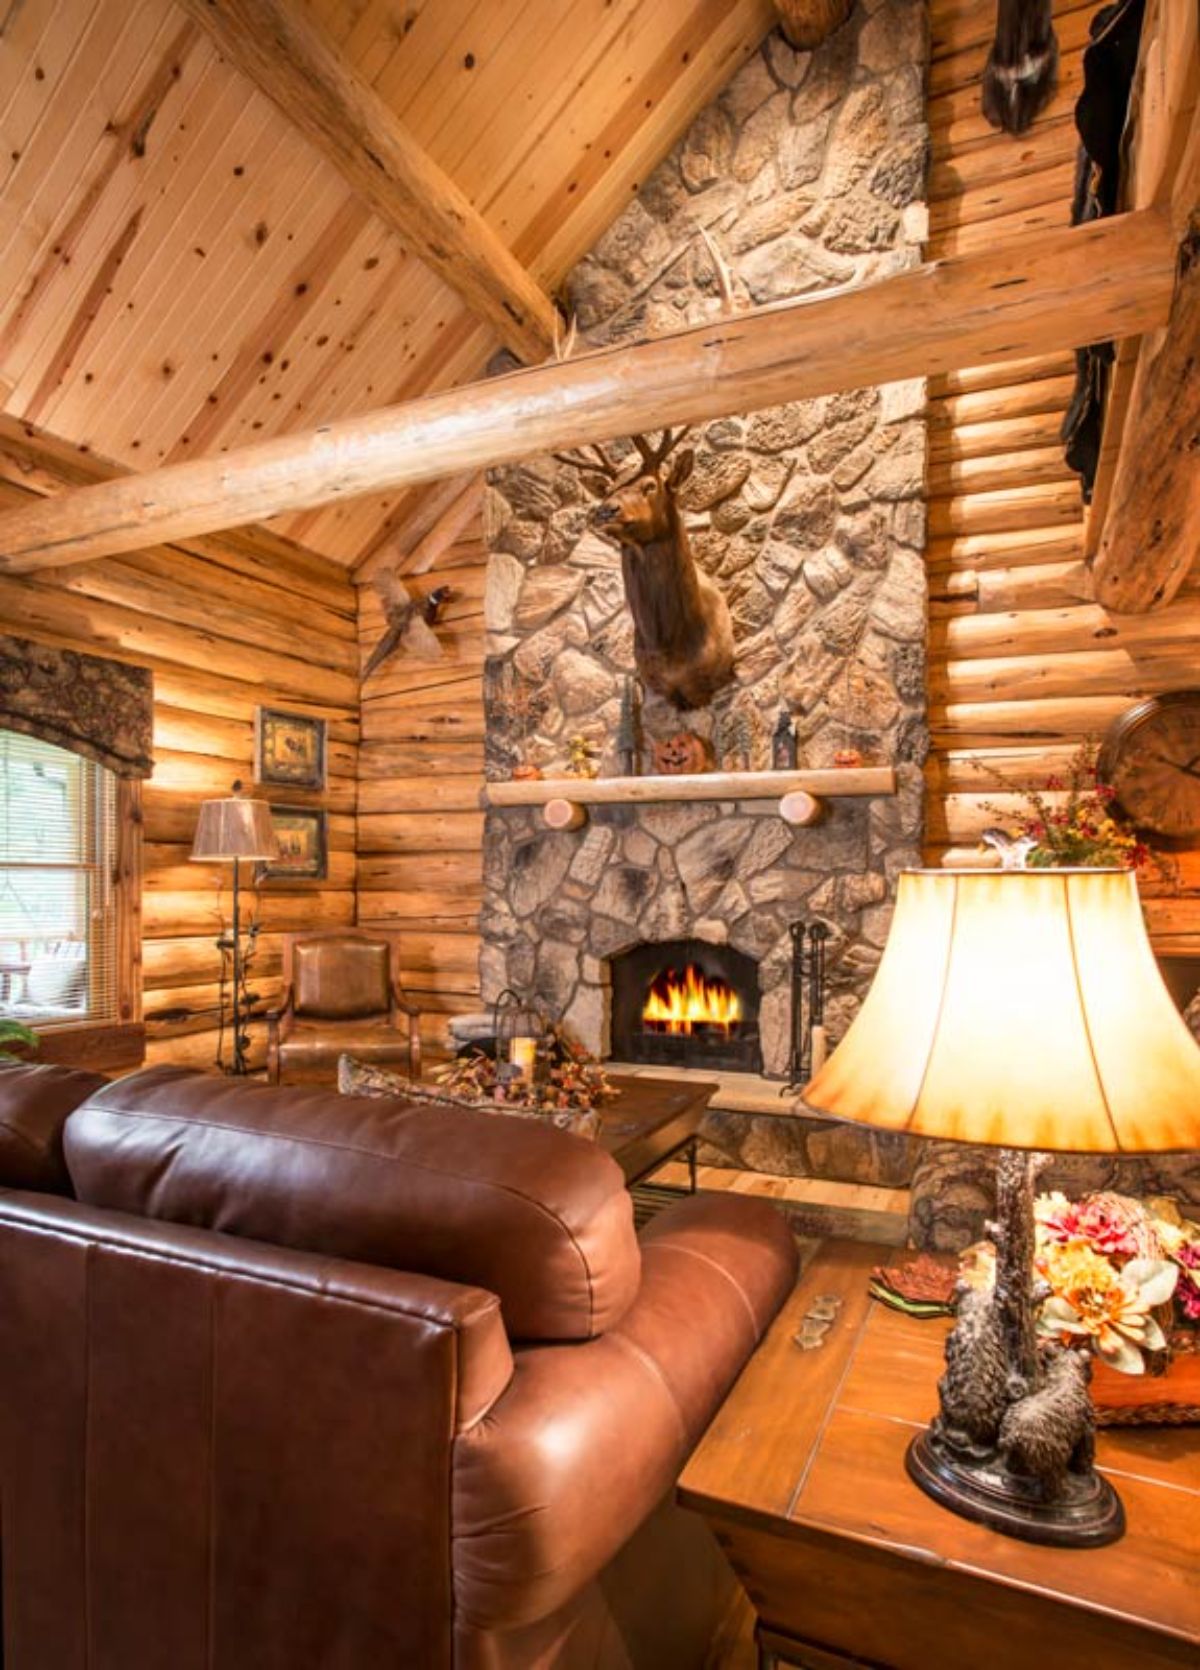 mounted deer head on top of fireplace in living room of log cabin